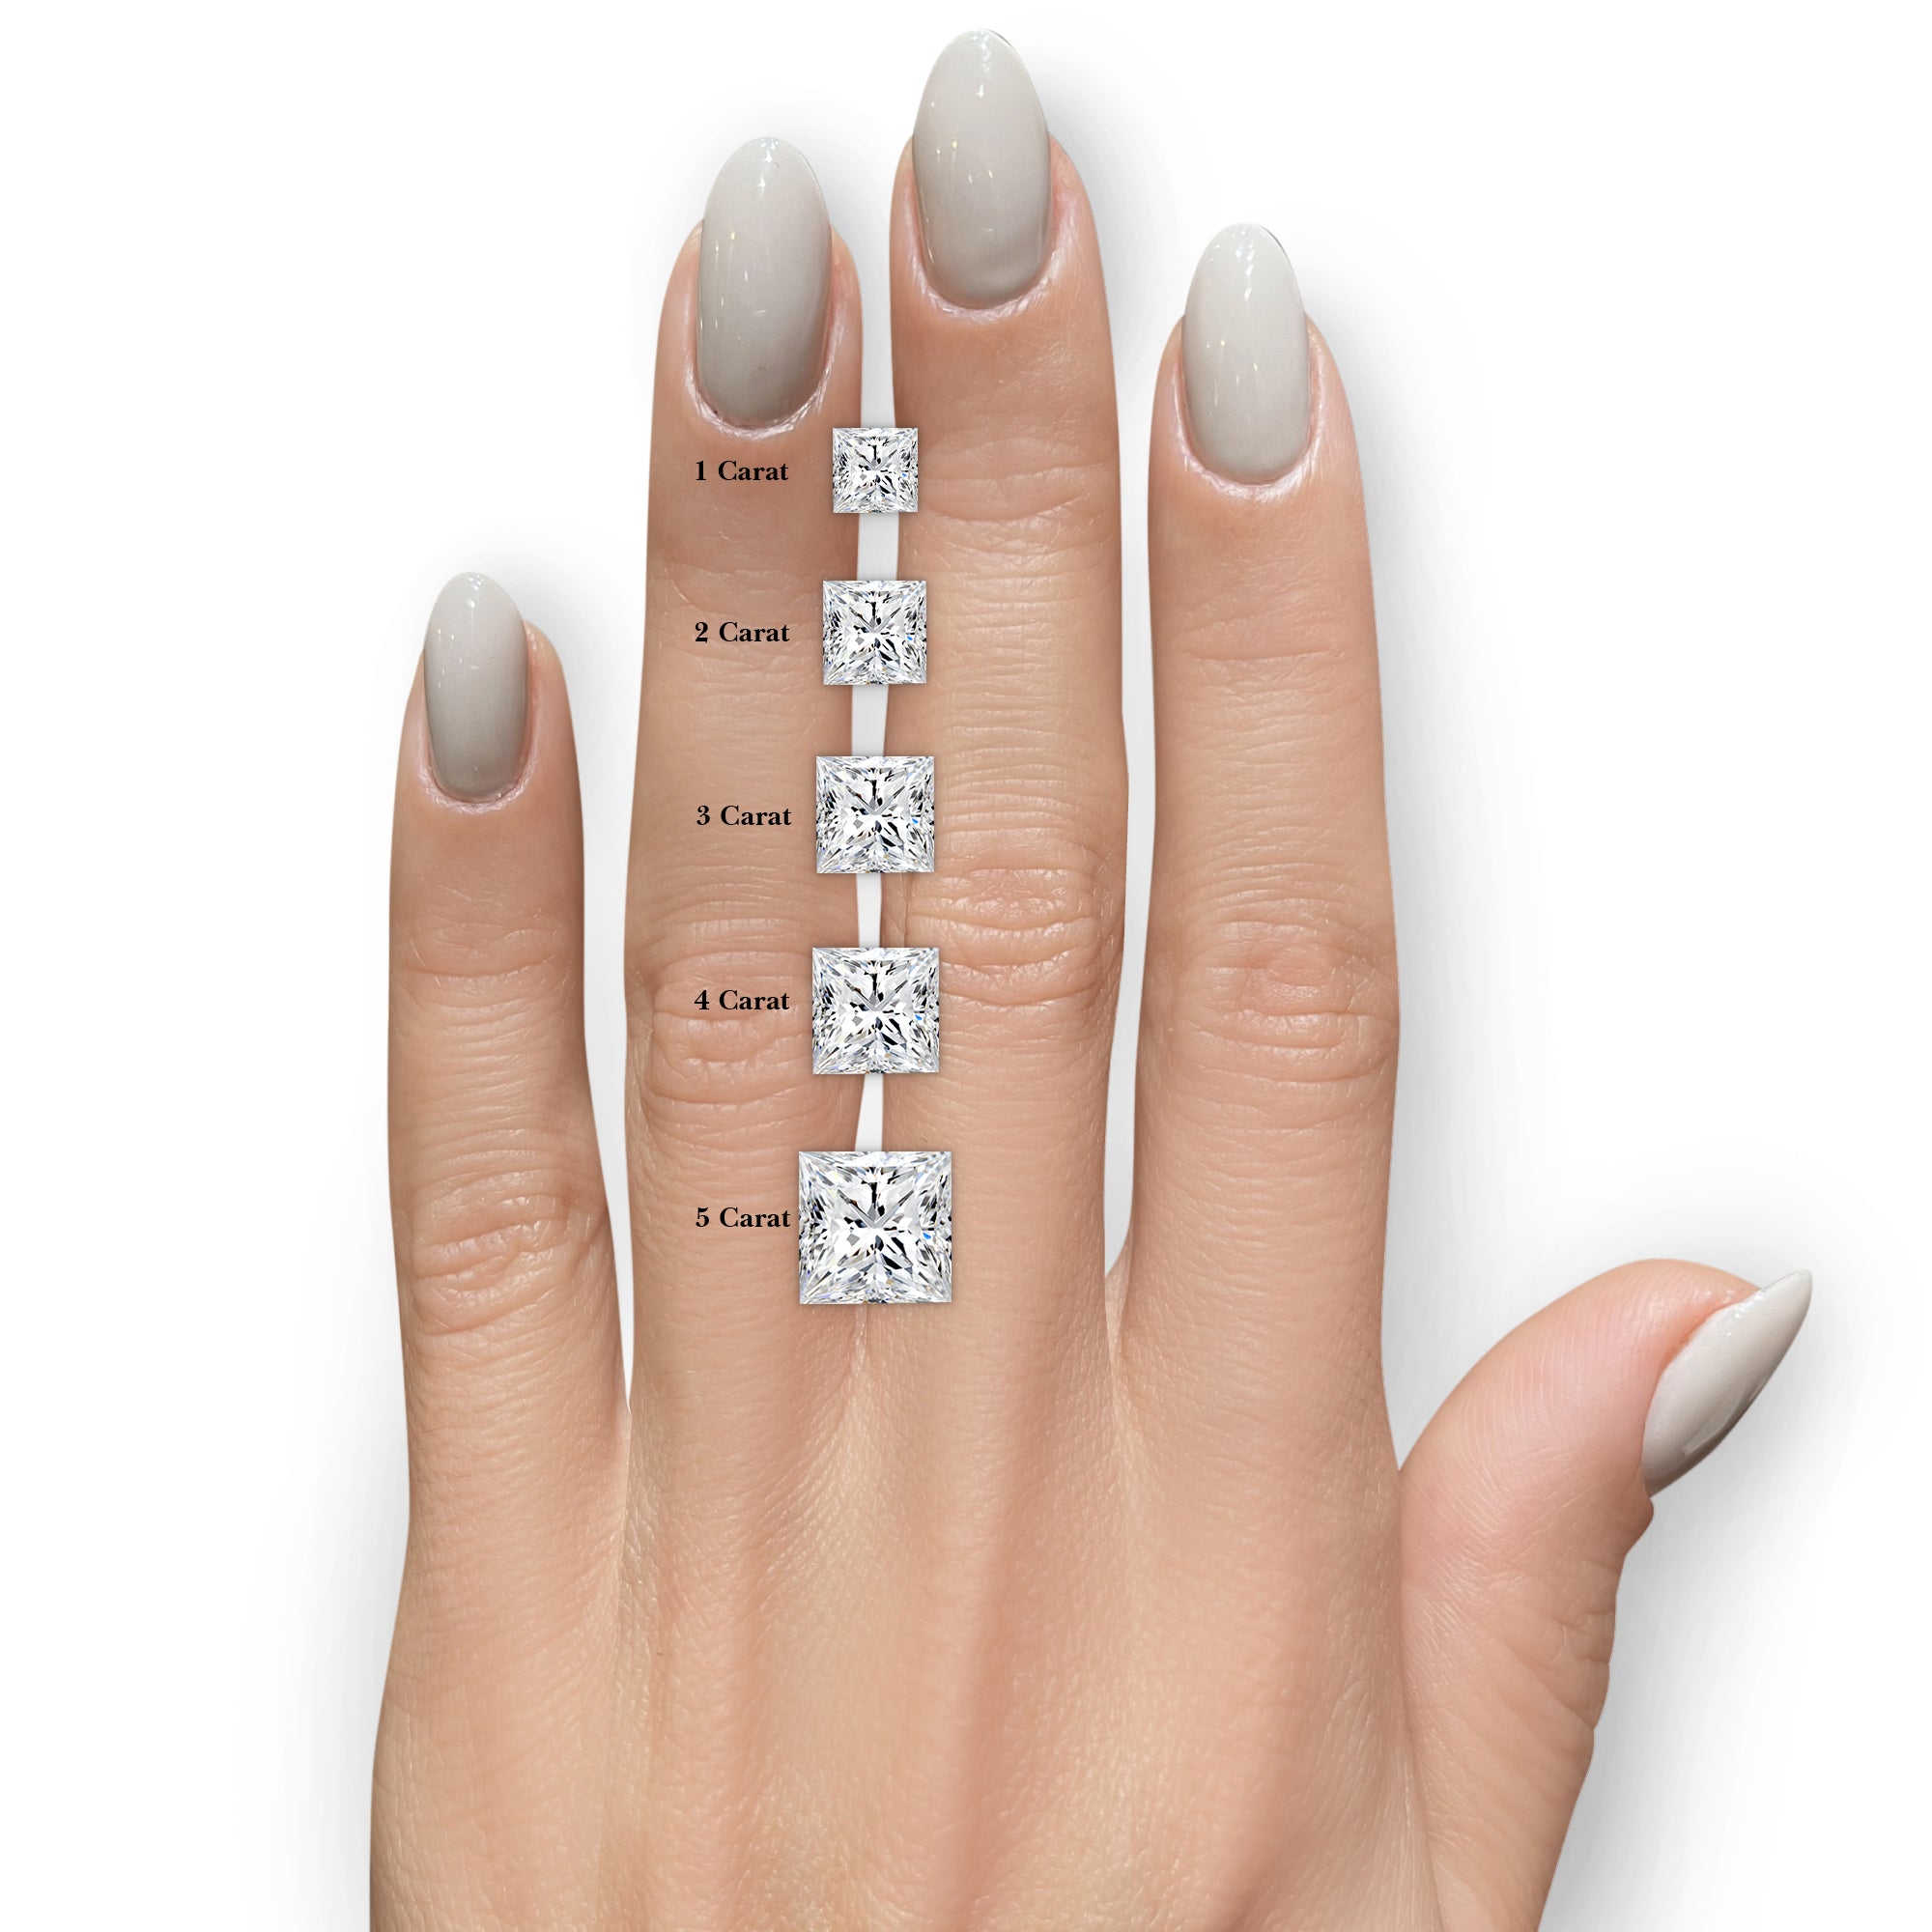 Patricia Lab Grown Diamond Ring -14K White Gold, Halo, 2.5 Carat